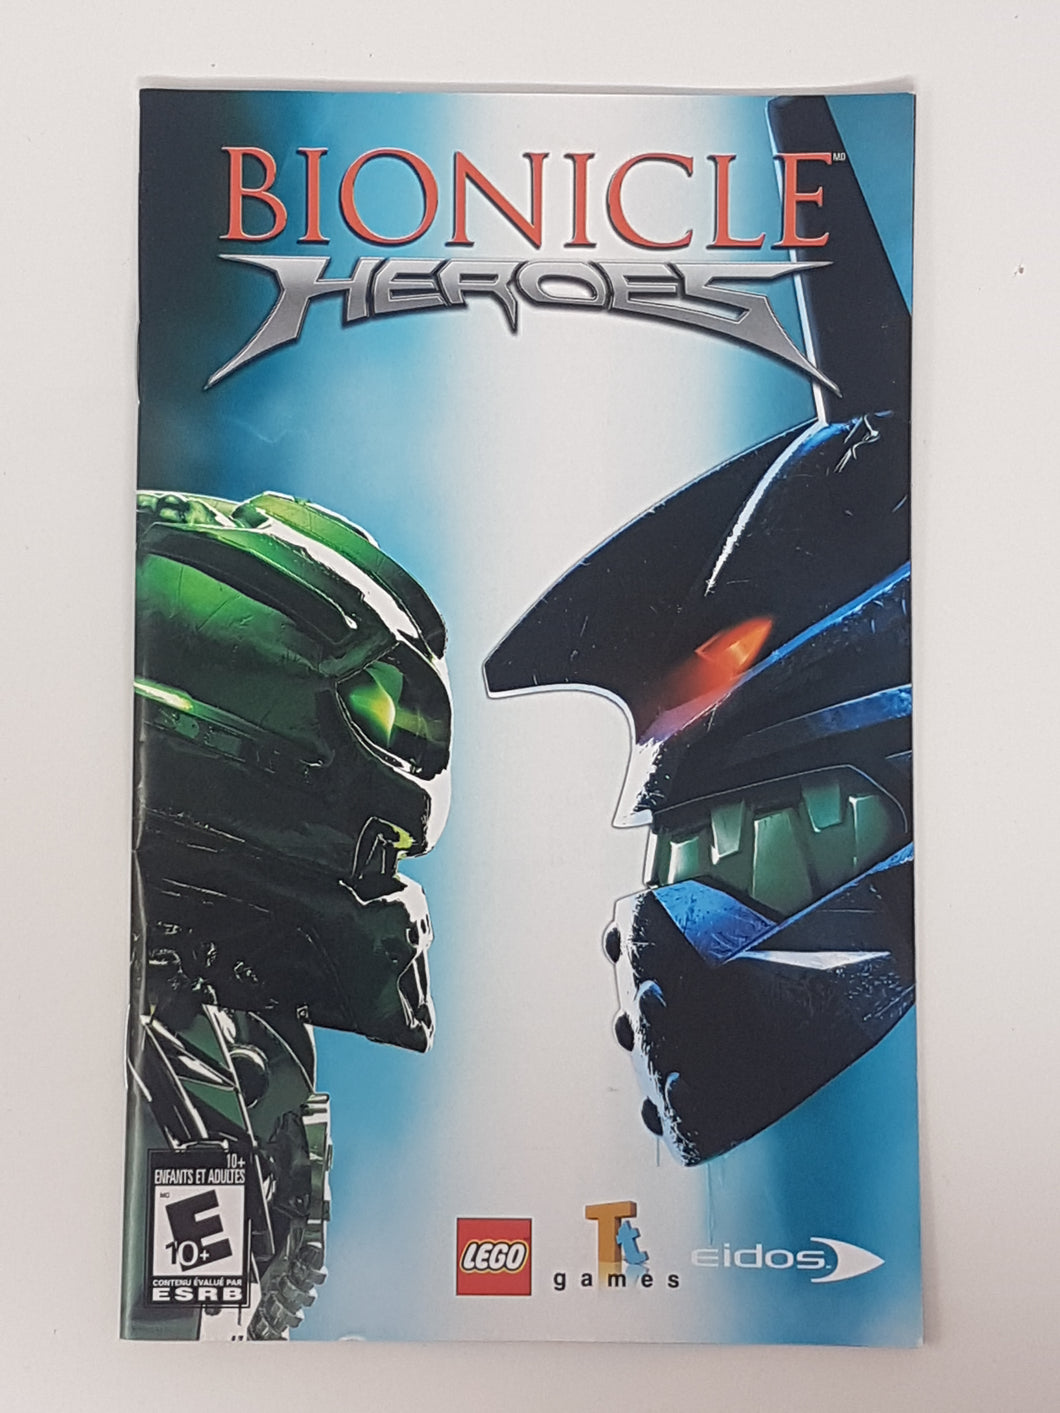 Bionicle Heroes [Manuel] - Playstation 2 | PS2